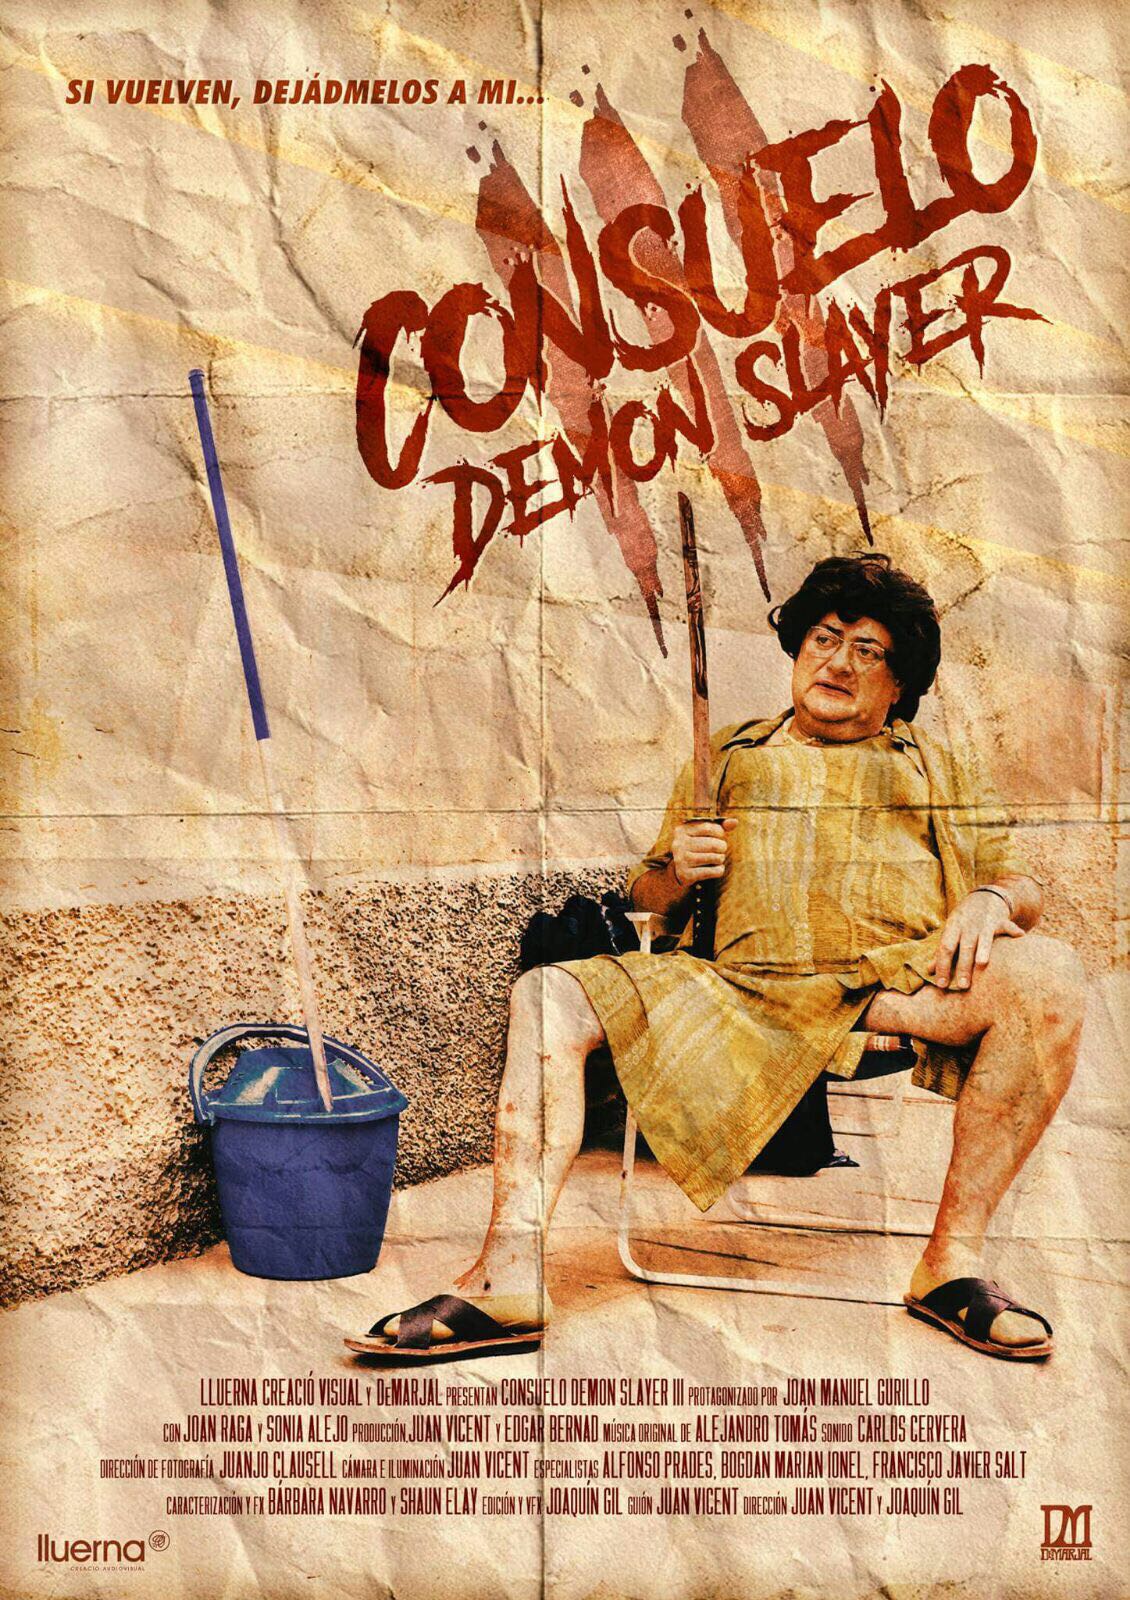 2017  -  Consuelo demon slayer. Protagonista.  Dirección Juan Vicent / Joaquin Gil.